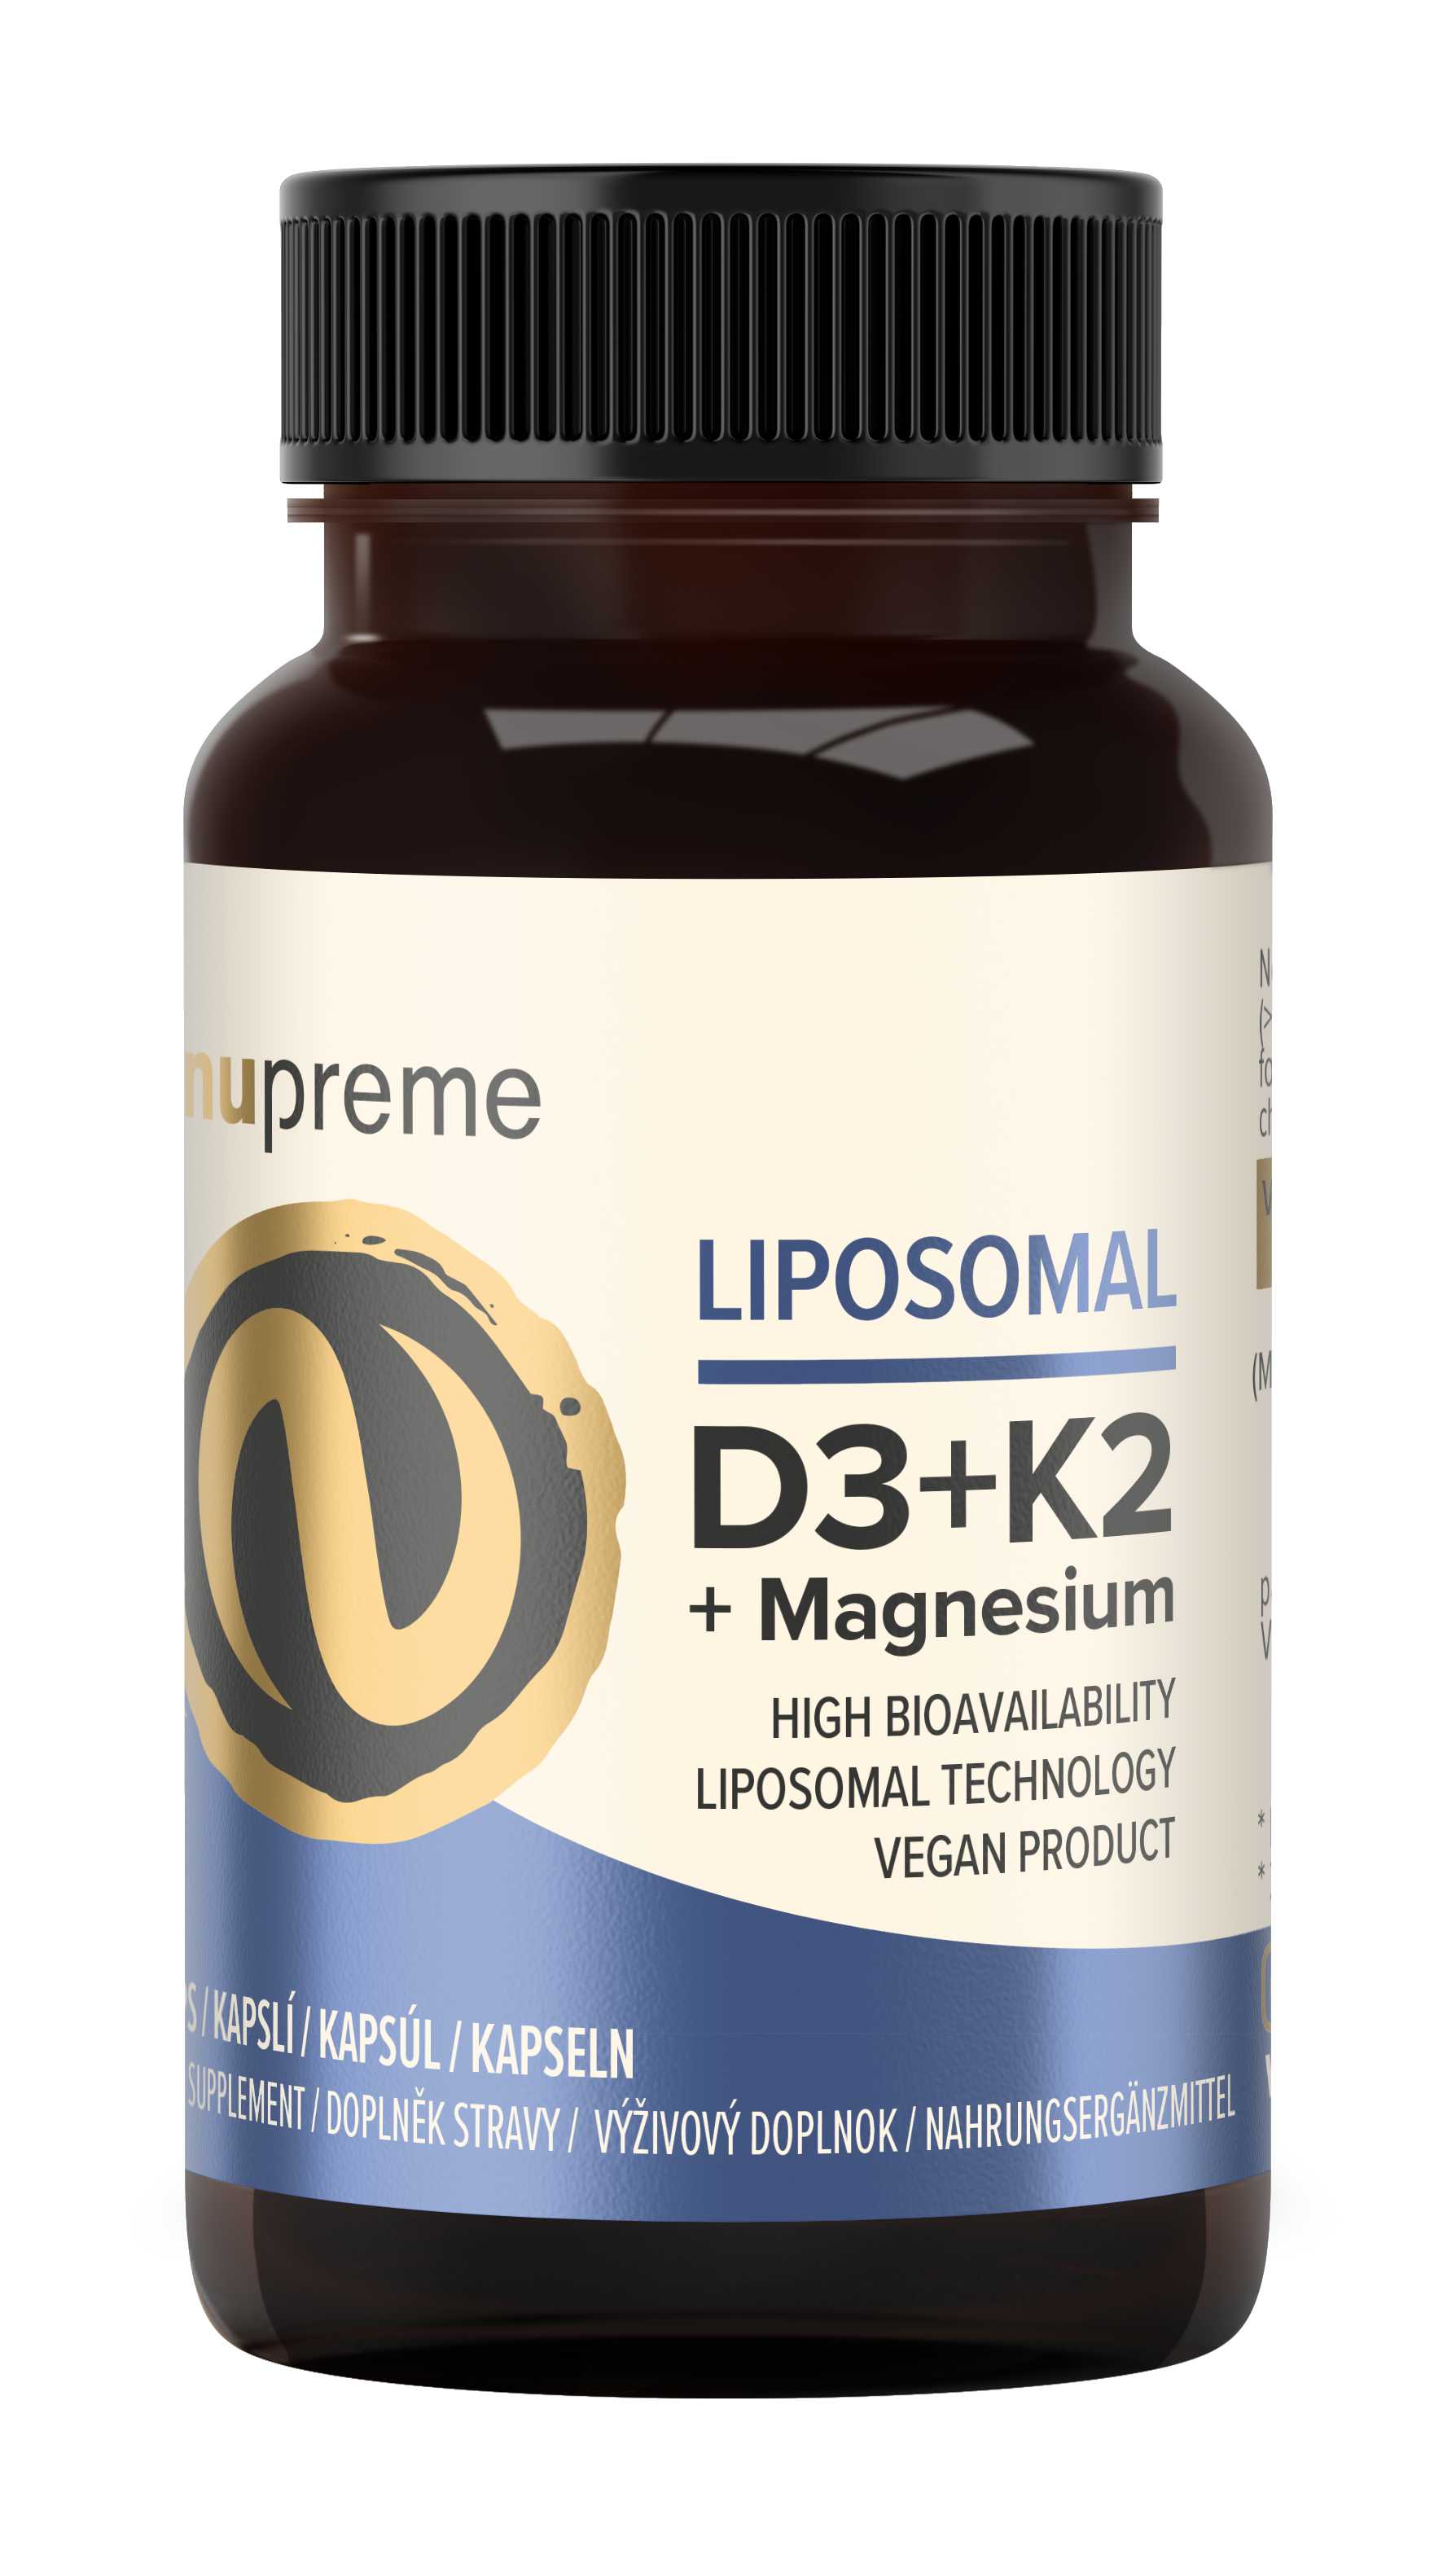 Nupreme Liposomal vitamín D3+K2 30 kapslí